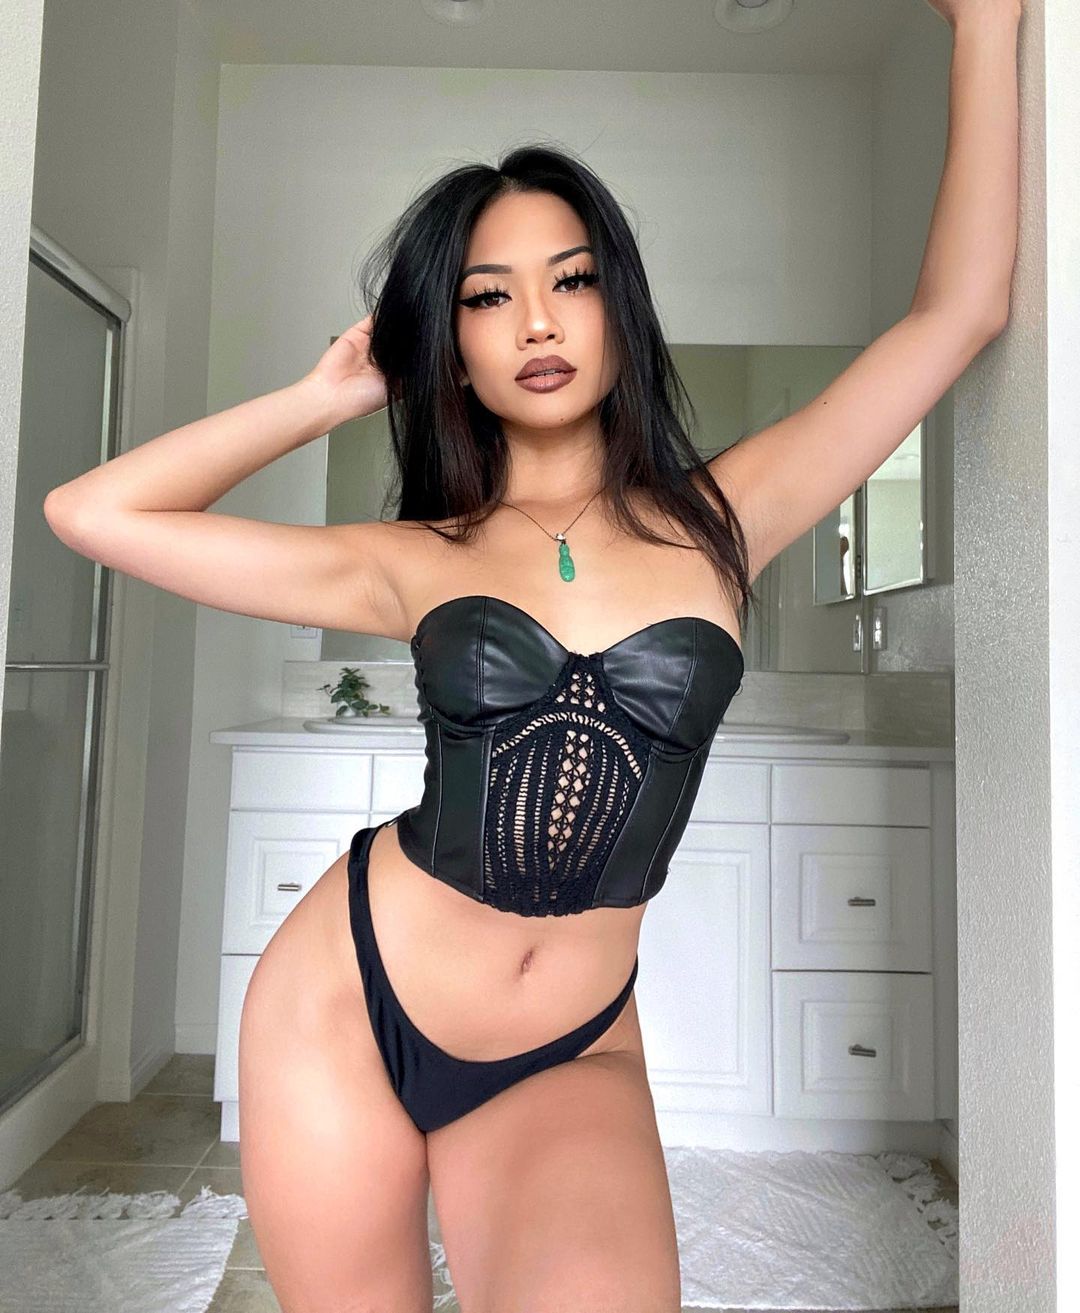 Beautiful Asian Girl In Black Lace Top